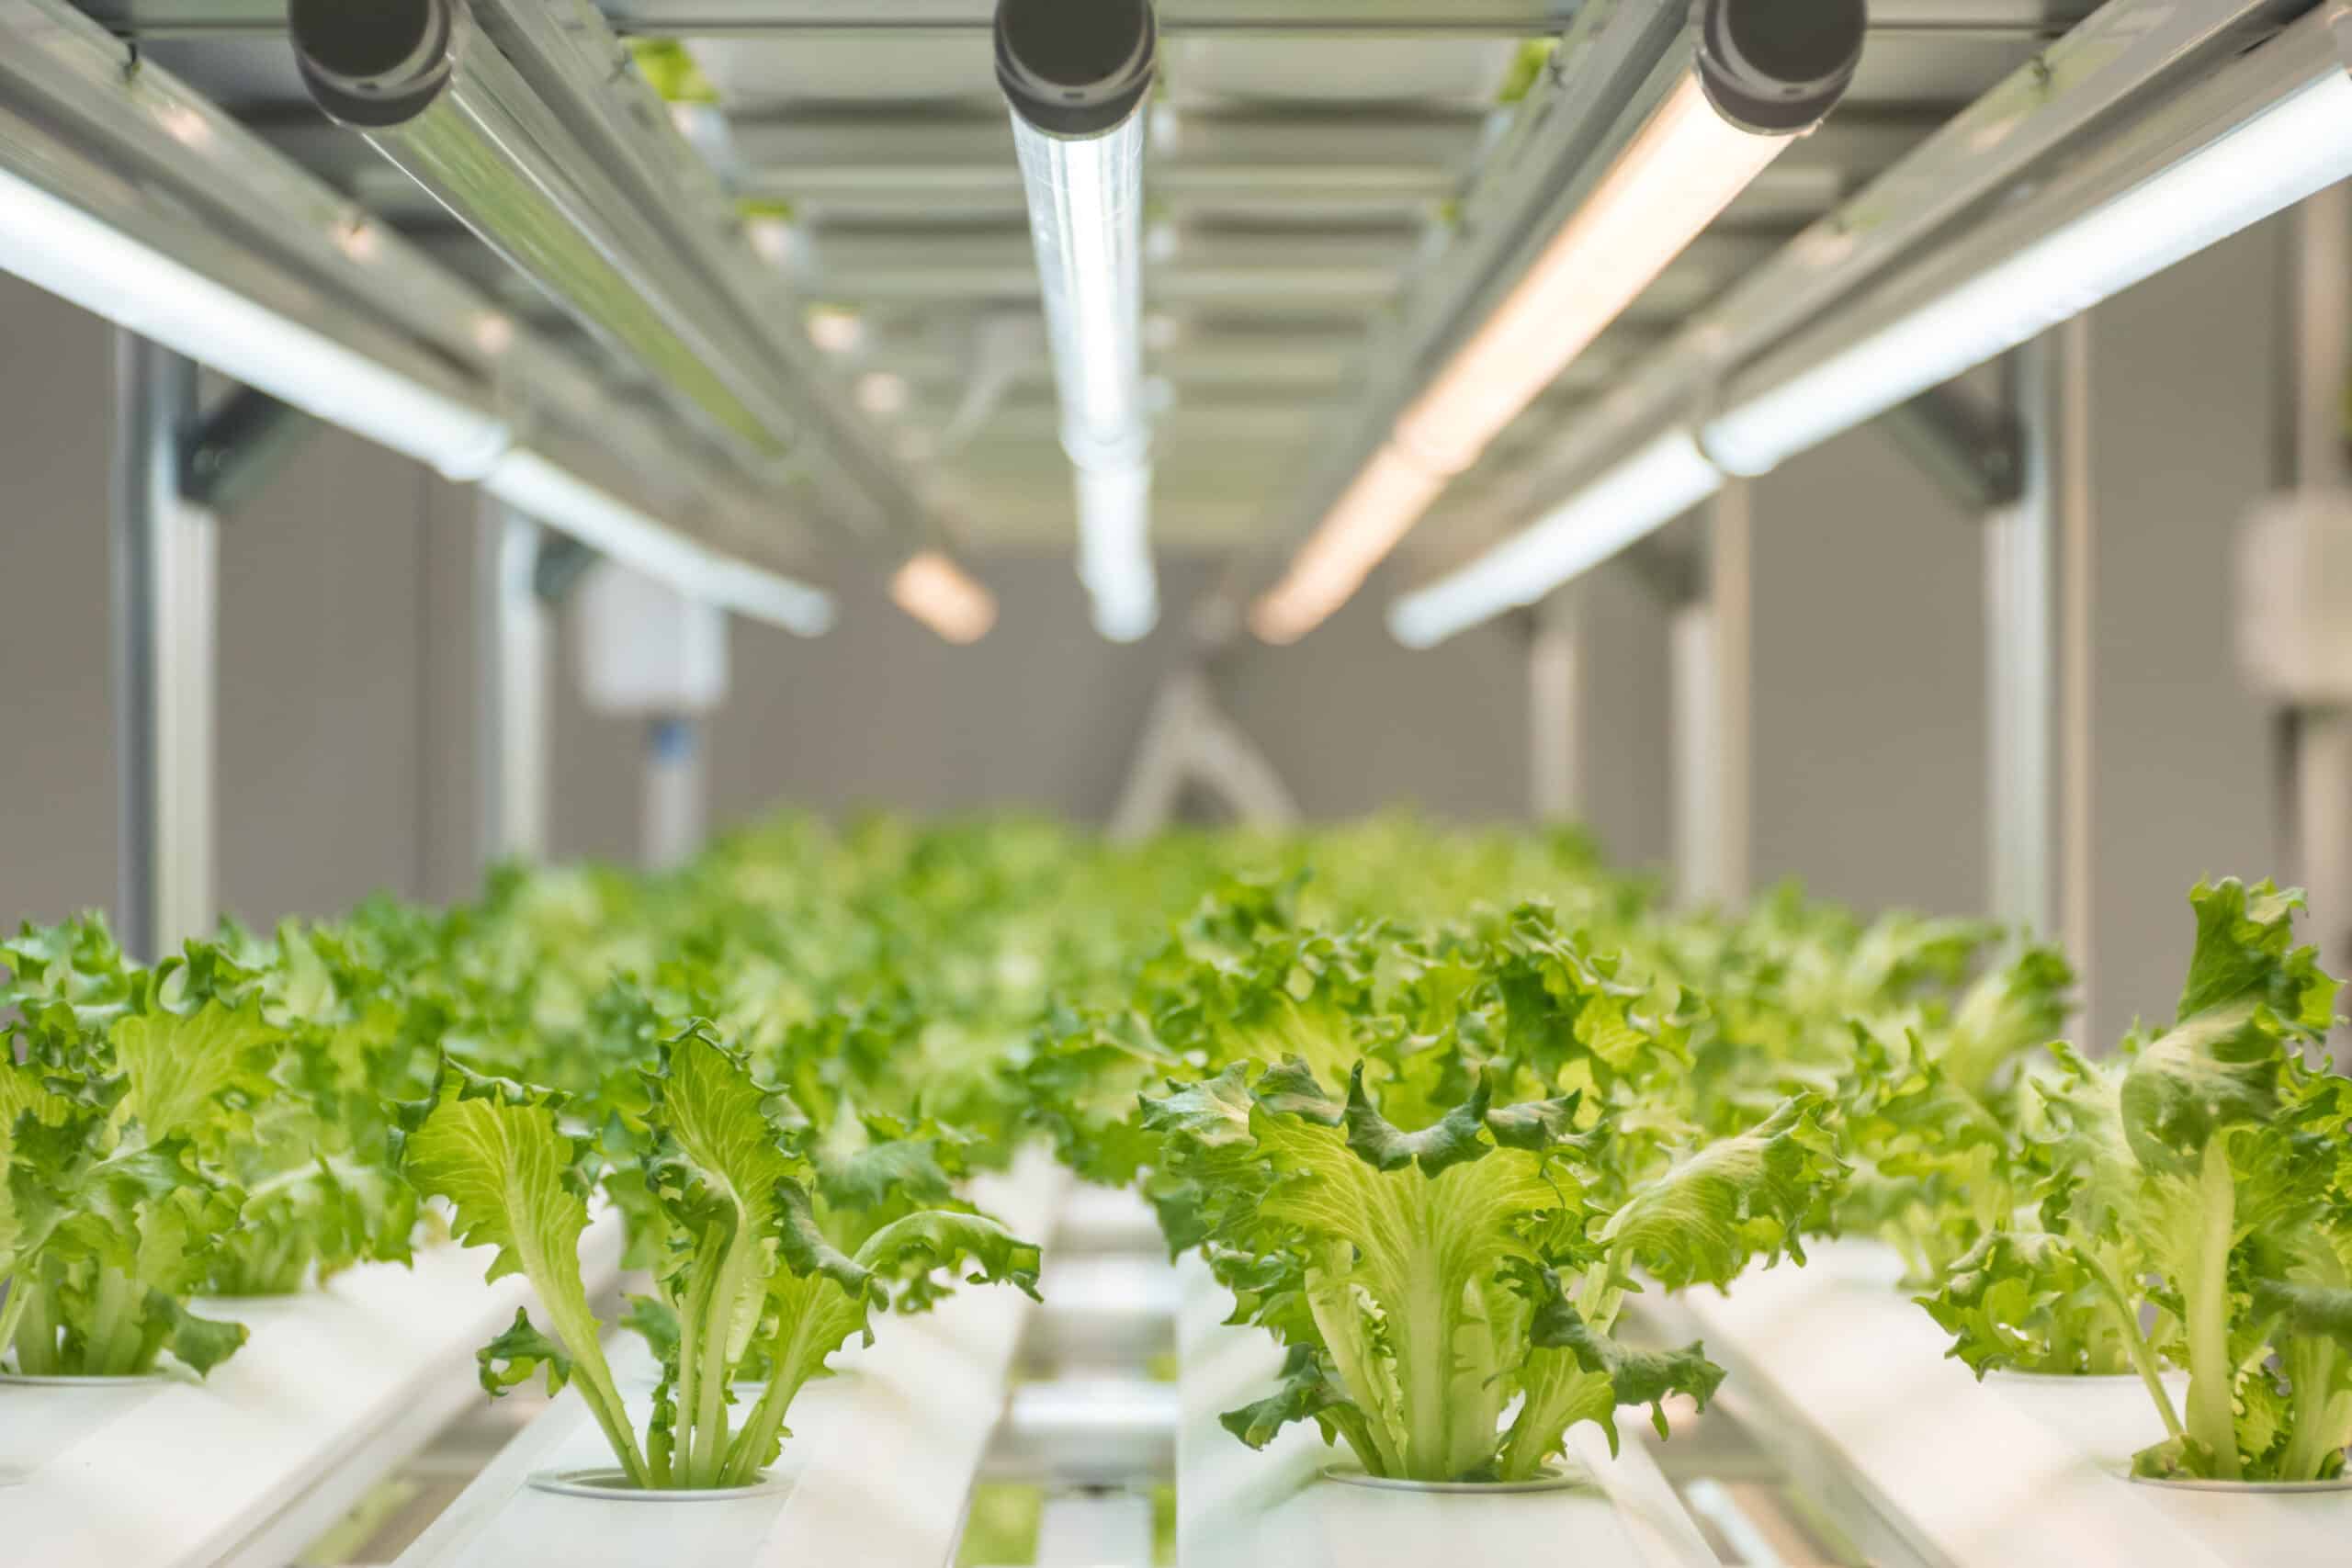 Lettuce growing in an indoor greenhouse